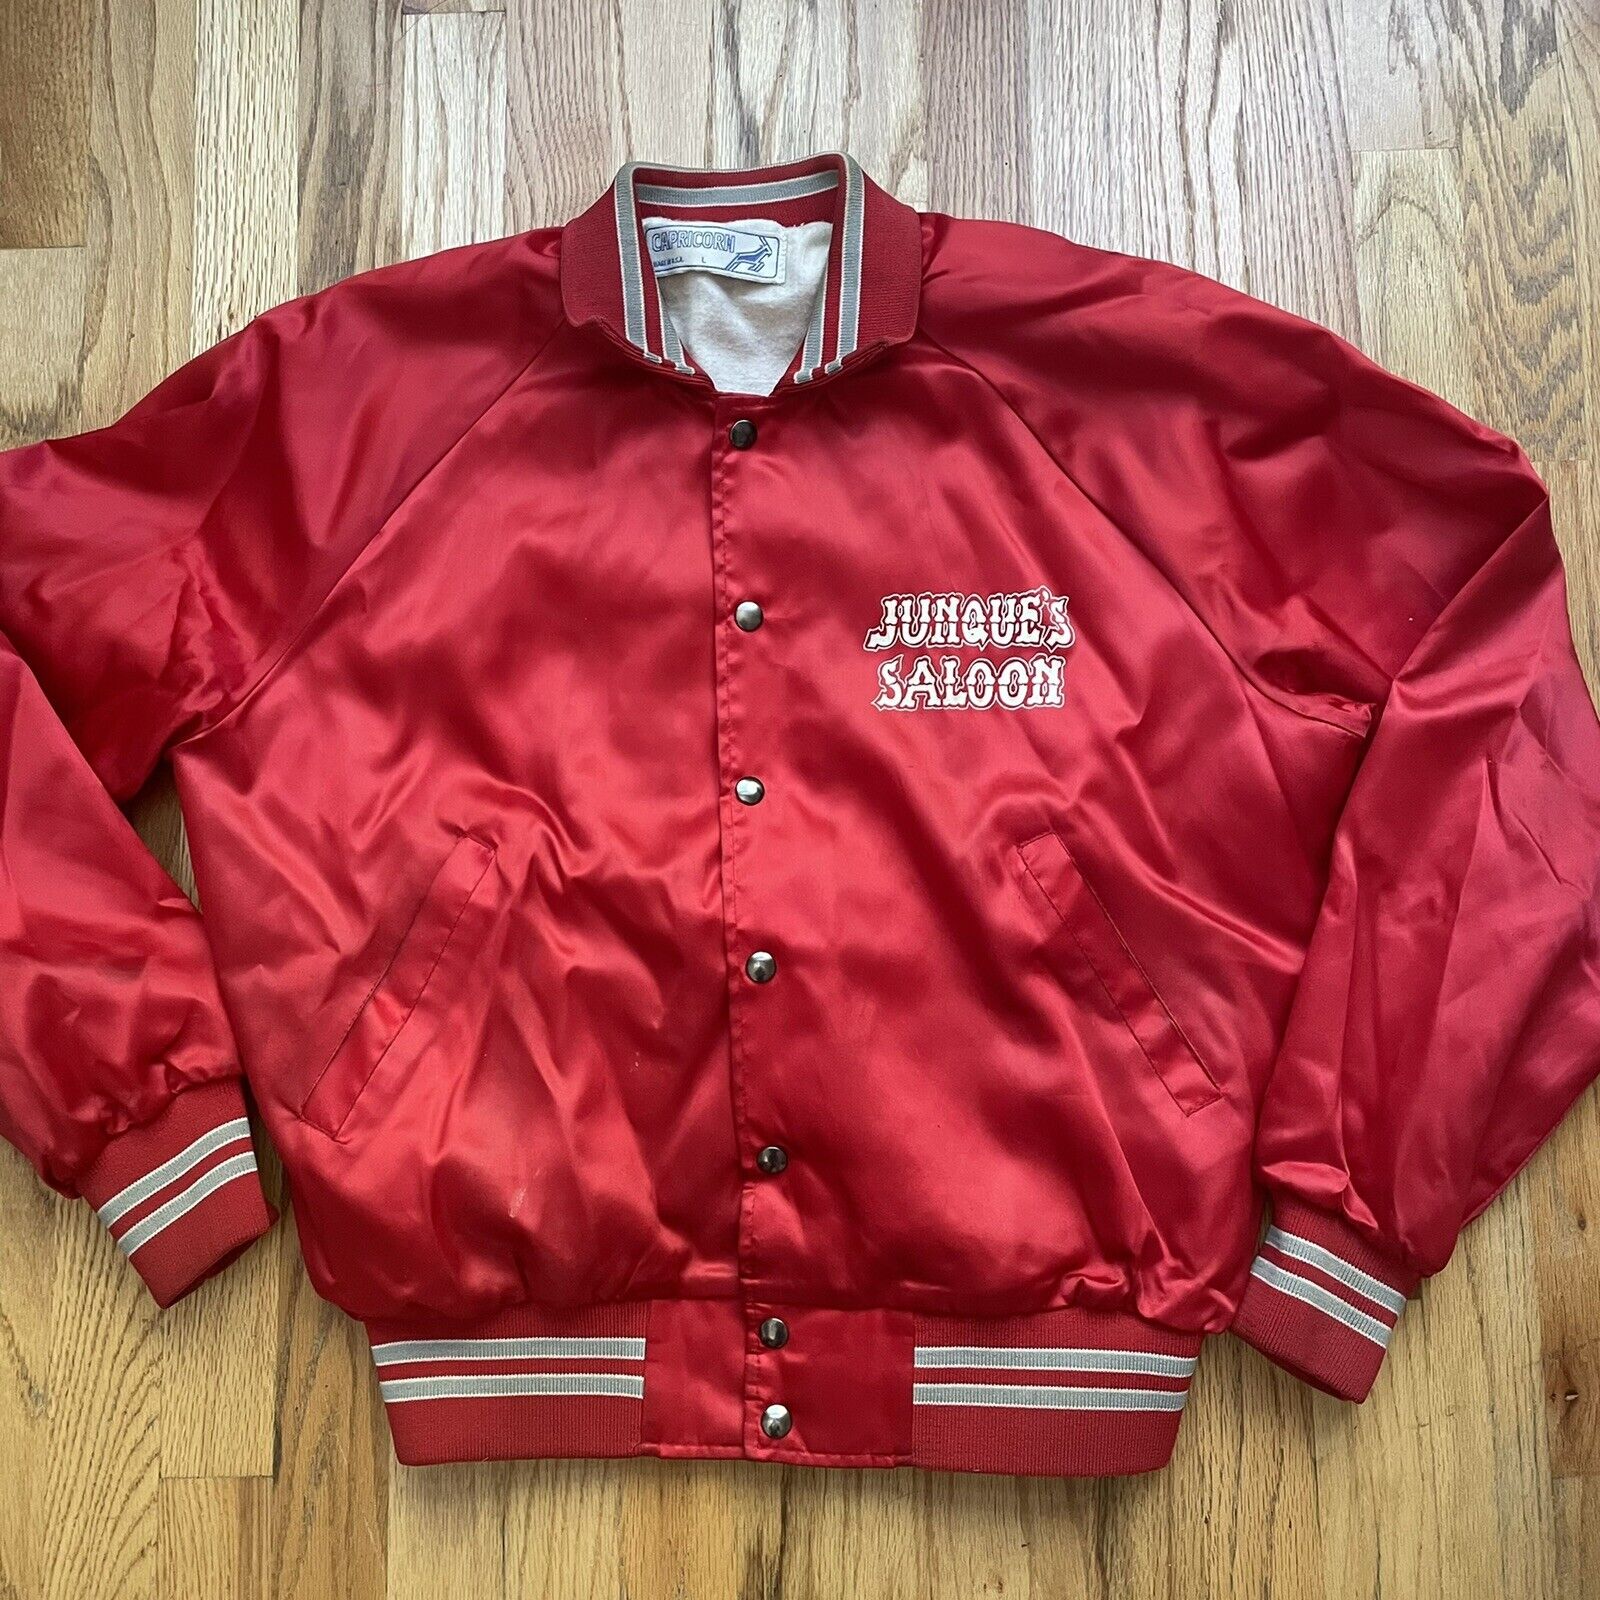 Vintage Red Satin Varsity Jacket